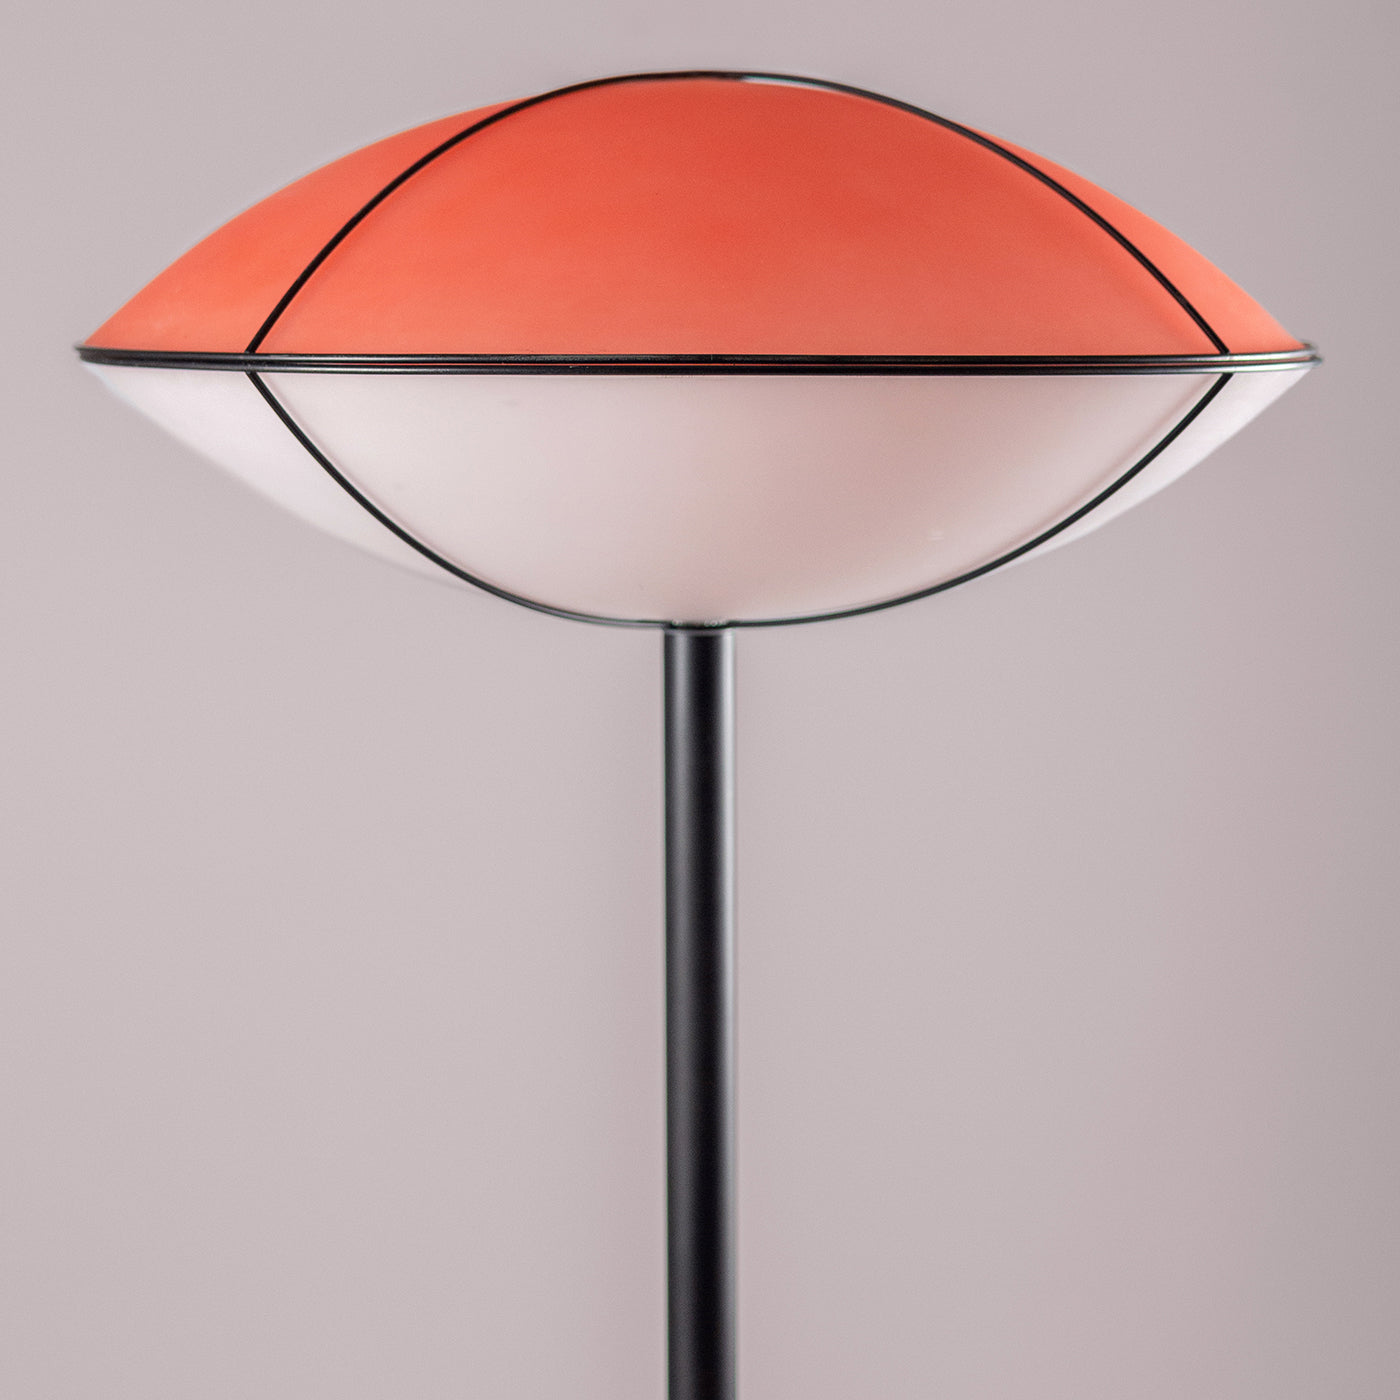 Dome Floor Lamp by Simone Fanciullacci - Alternative view 1